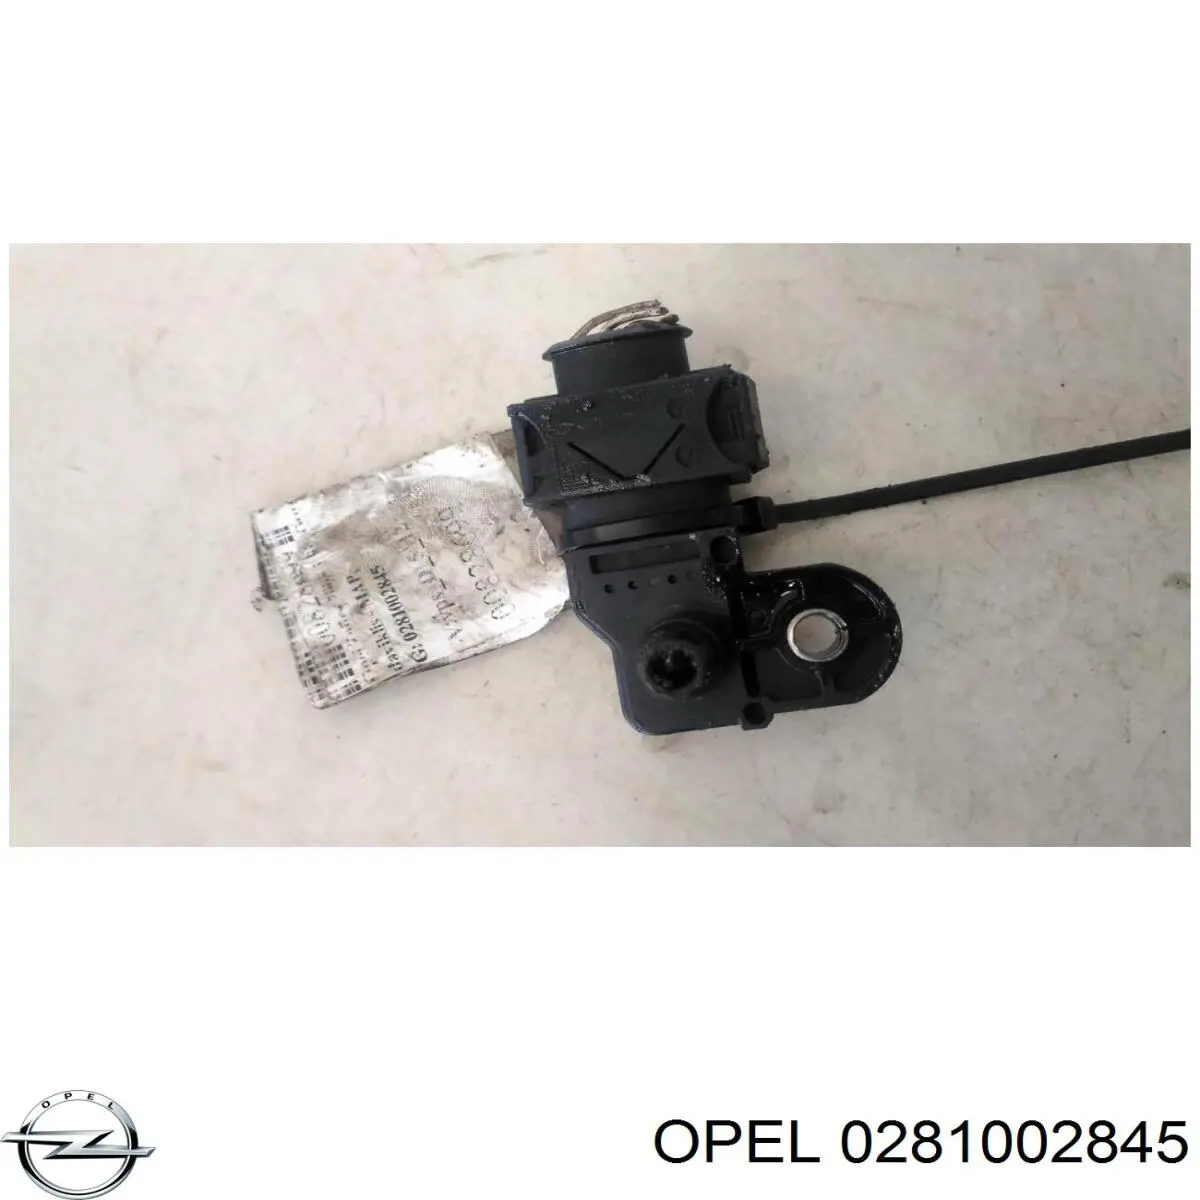 0281002845 Opel sensor de presion de carga (inyeccion de aire turbina)